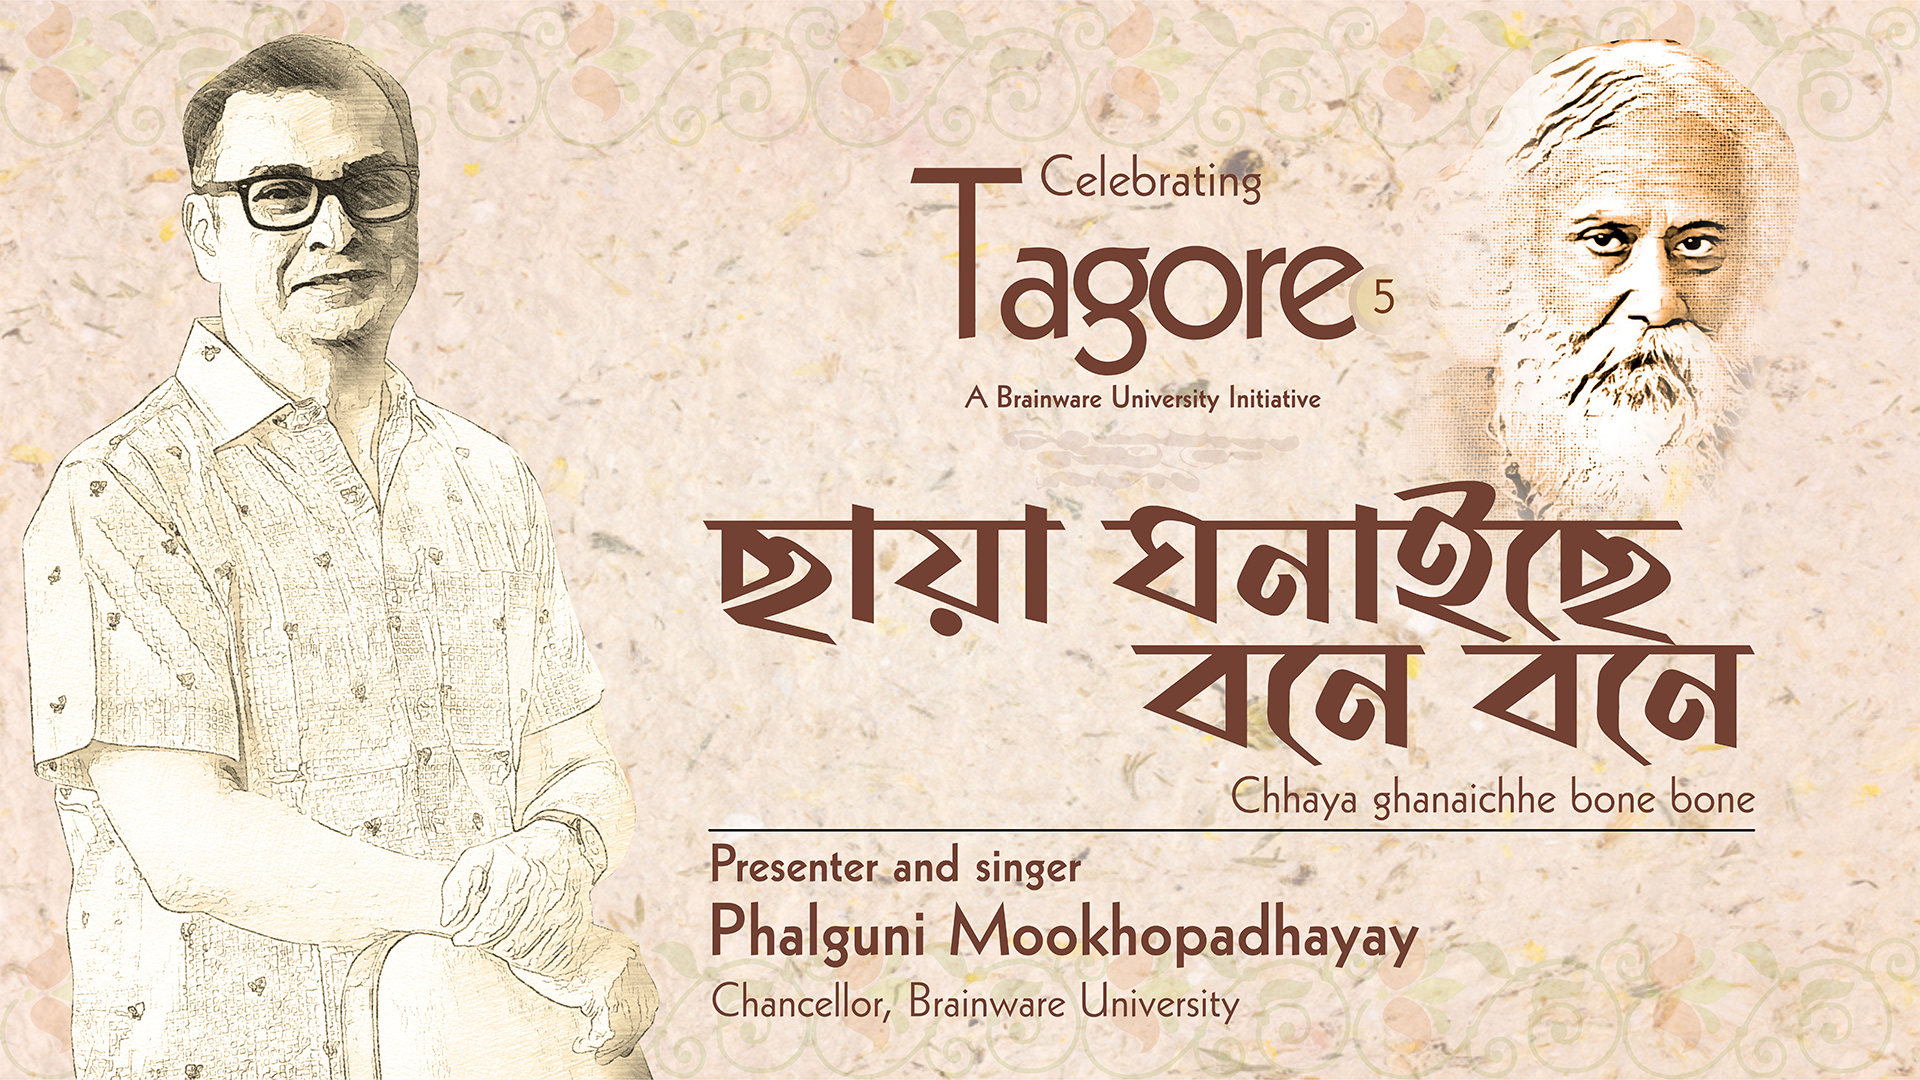 Celebrating Tagore: A Brainware University Initiative featuring Chancellor Phalguni Mookhopadhayay presenting and singing the Rabindra Sangeet "Chhaya ghanaichhe bone bone."